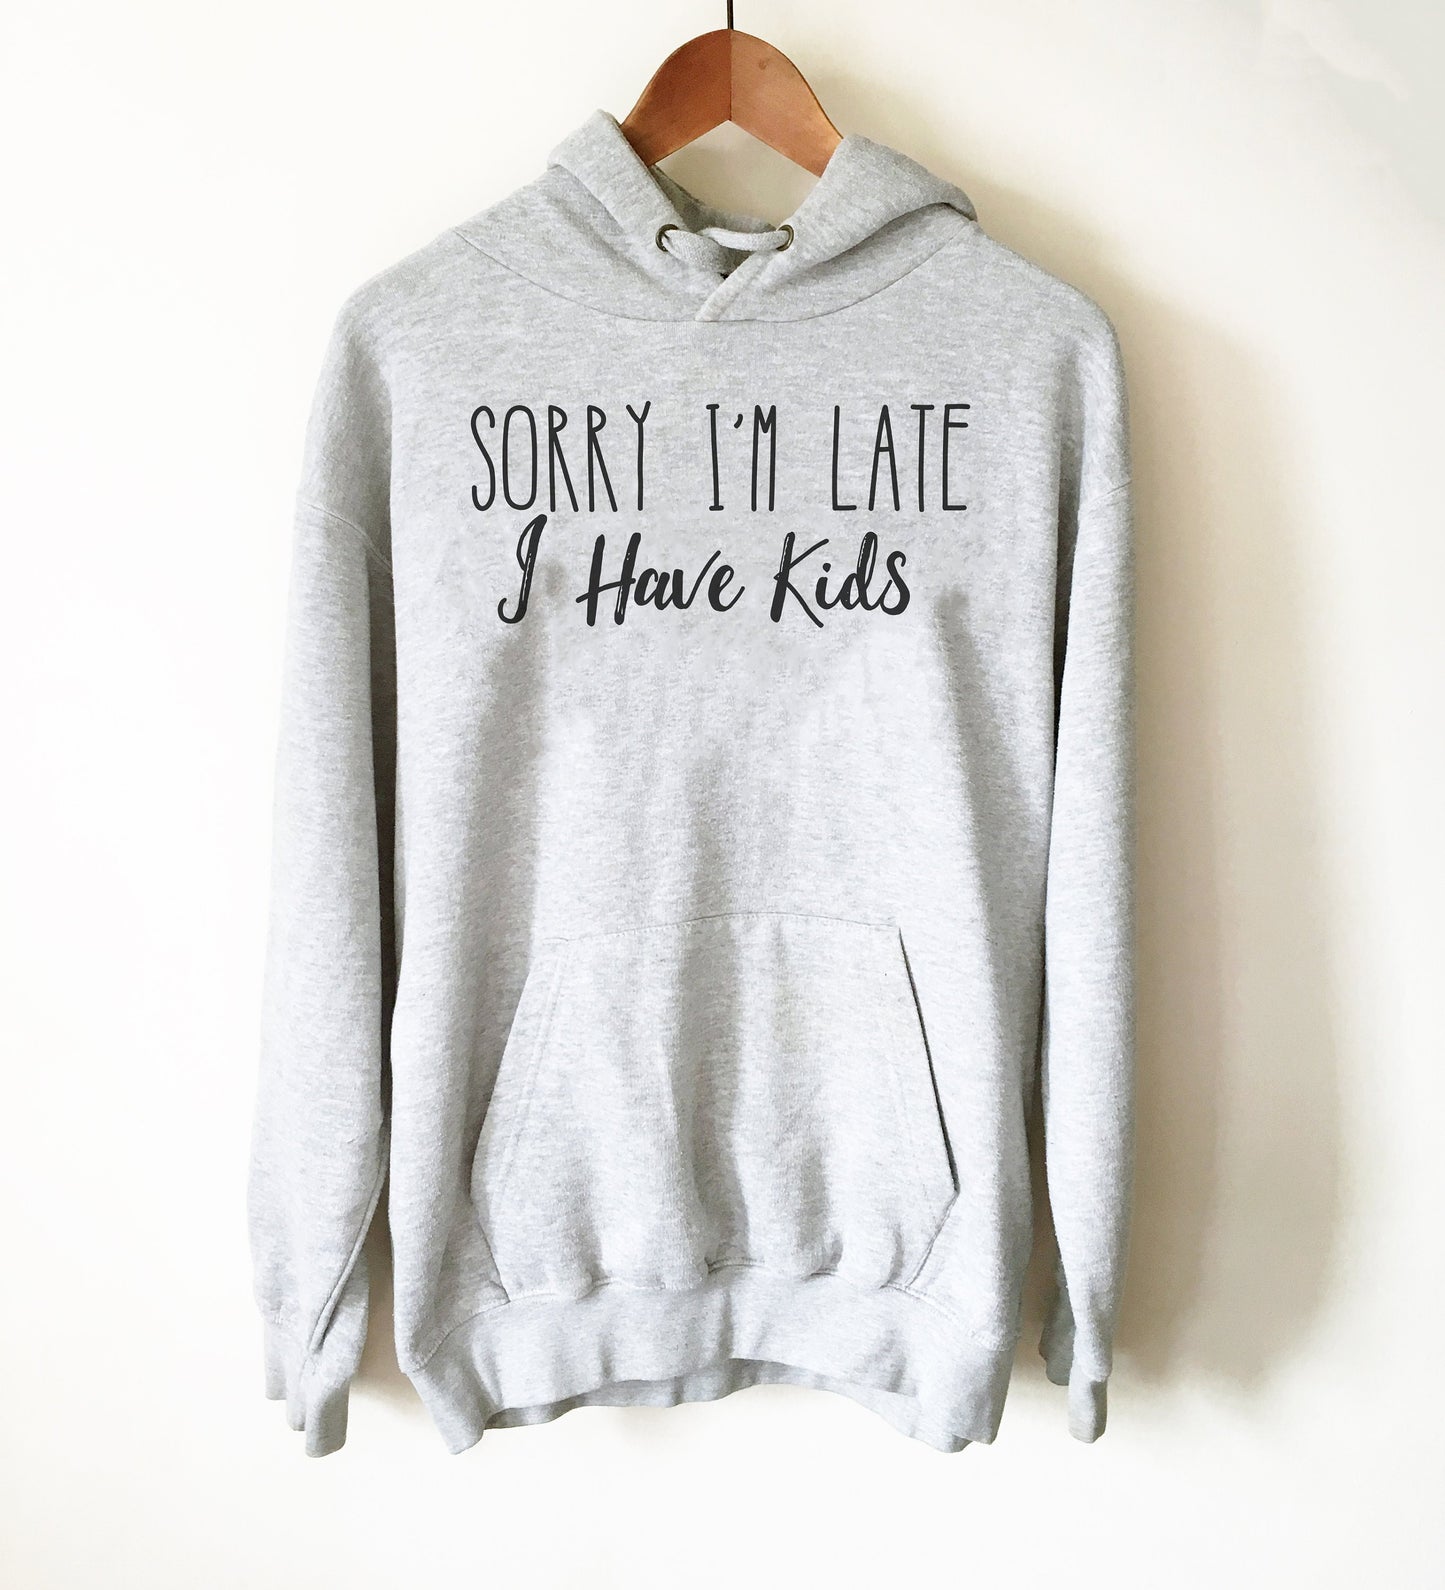 Sorry I’m Late I Have Kids Hoodie - Late Shirt, Late Gift, Always Late Shirt, Running Late Shirt, Sorry I'm Late Shirt, Mom Shirt